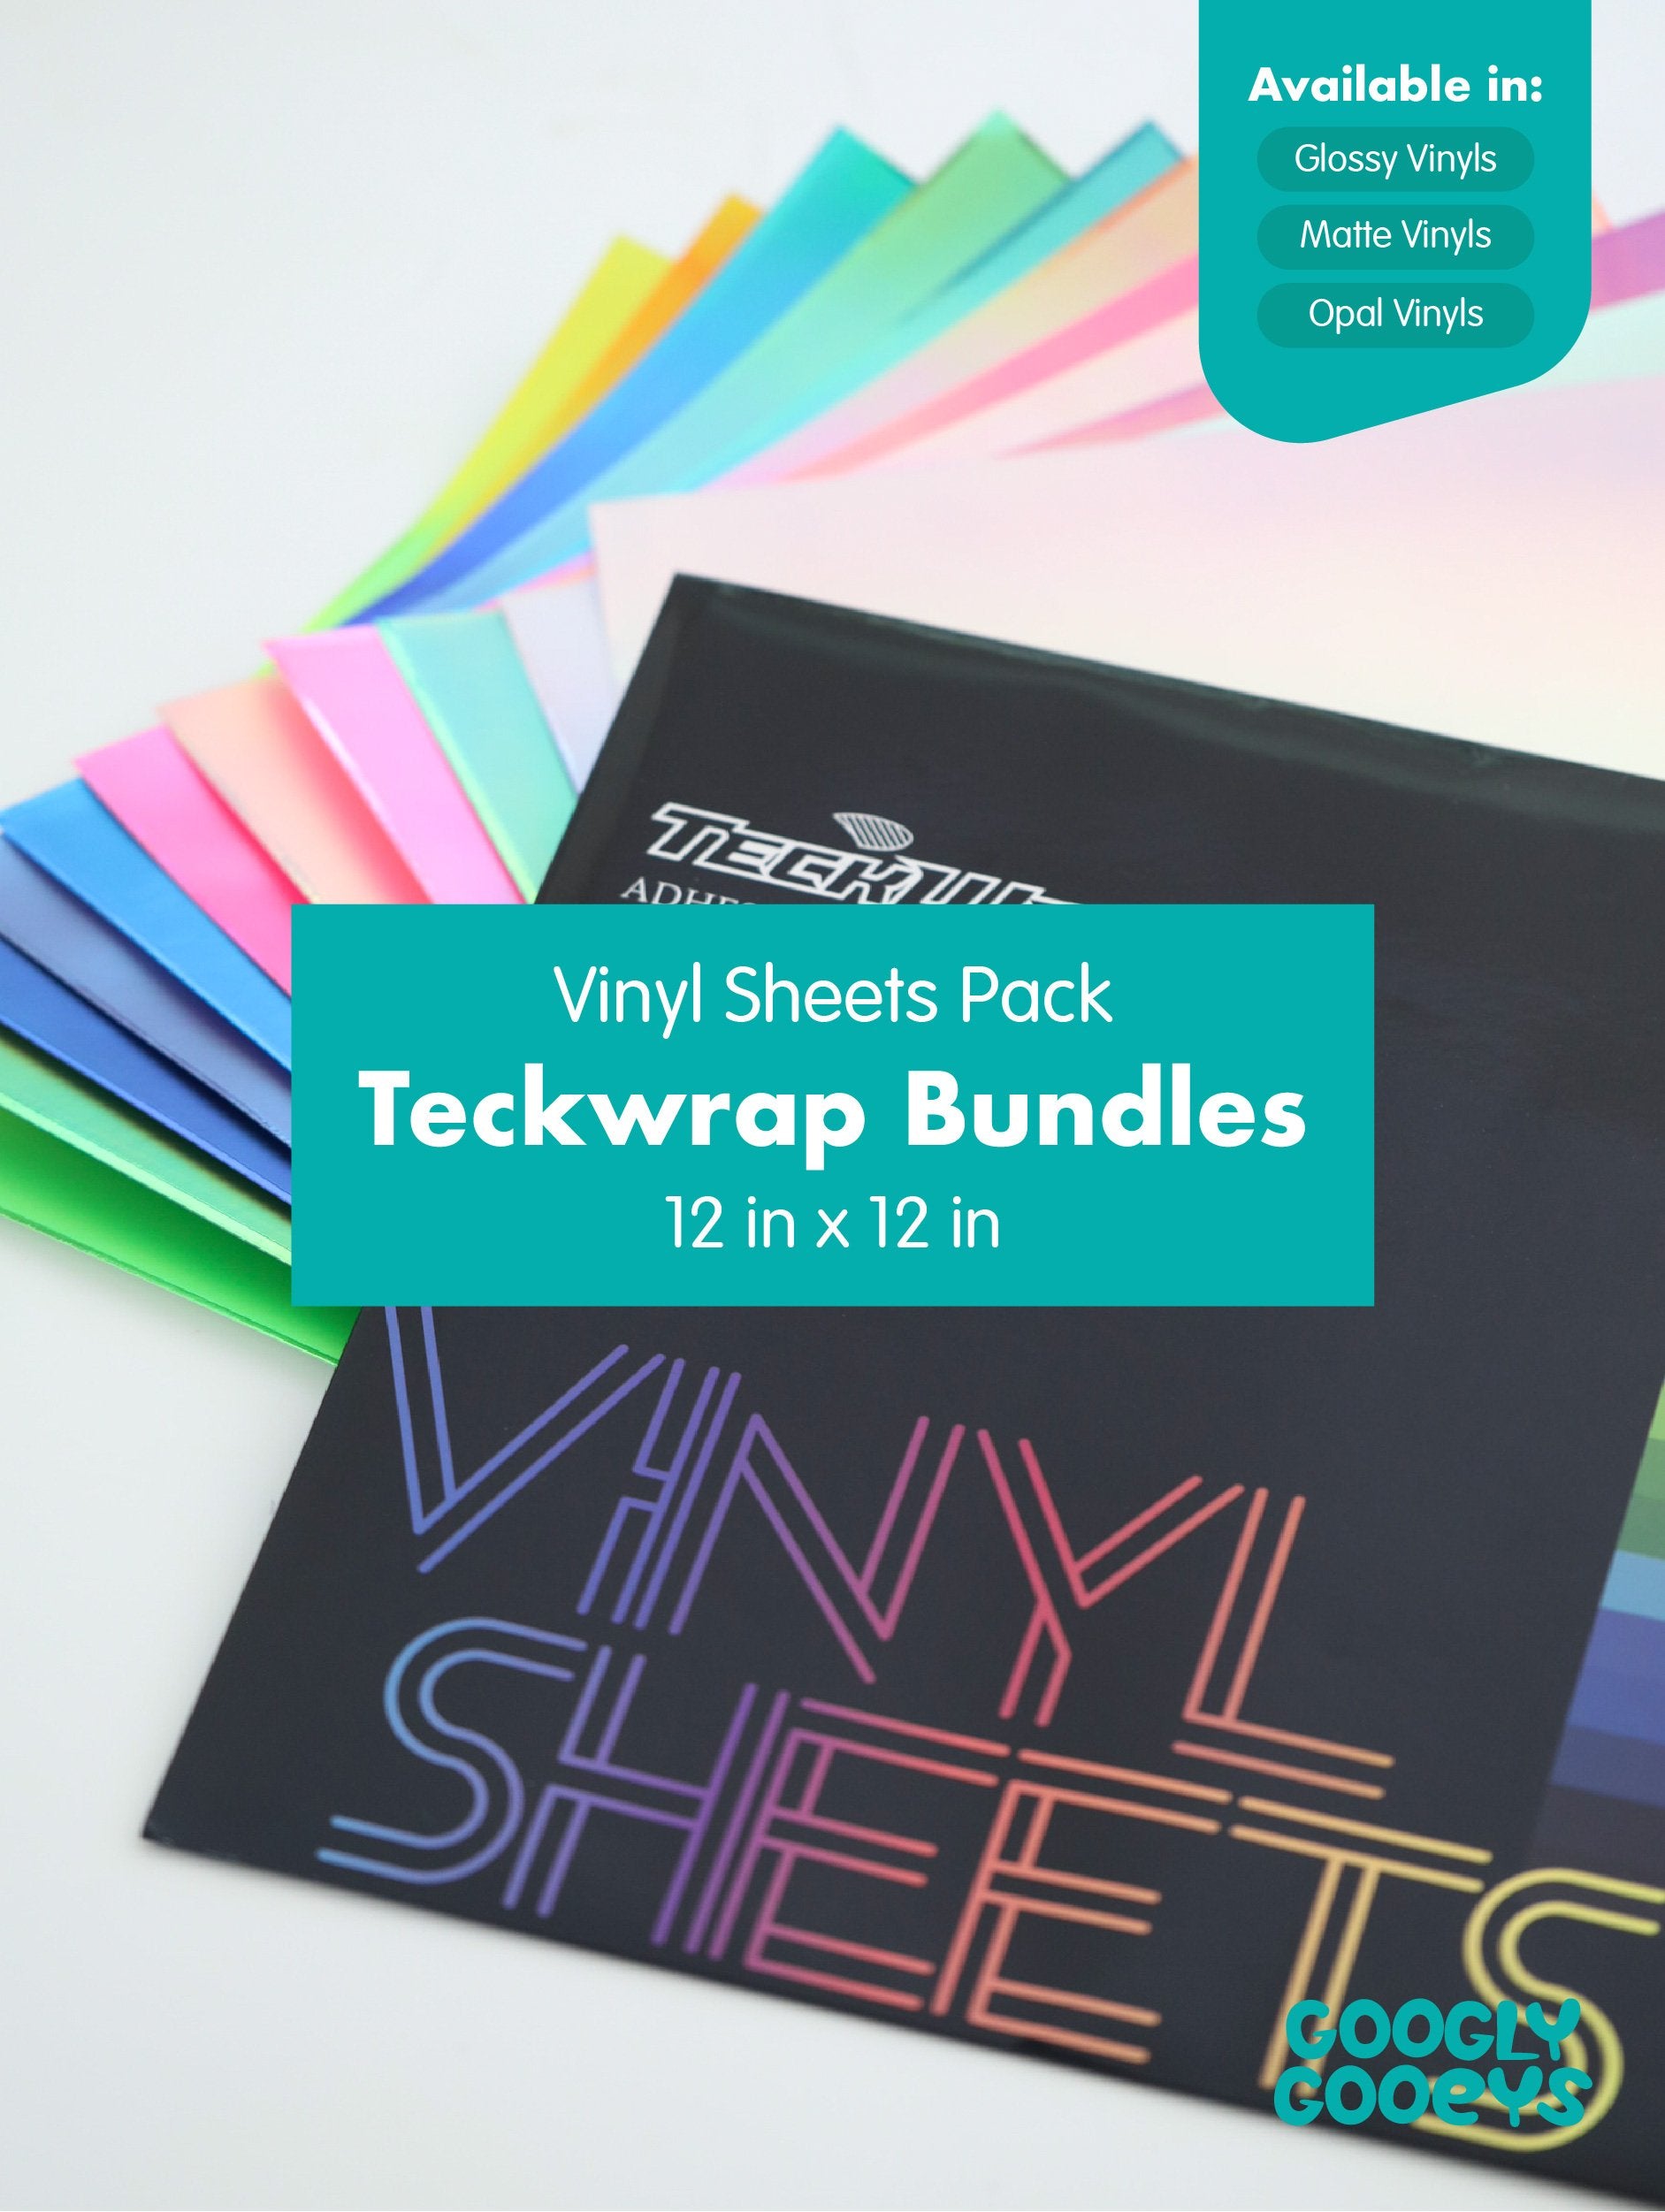 Teckwrap Bundles (Vinyl Sheets Pack)